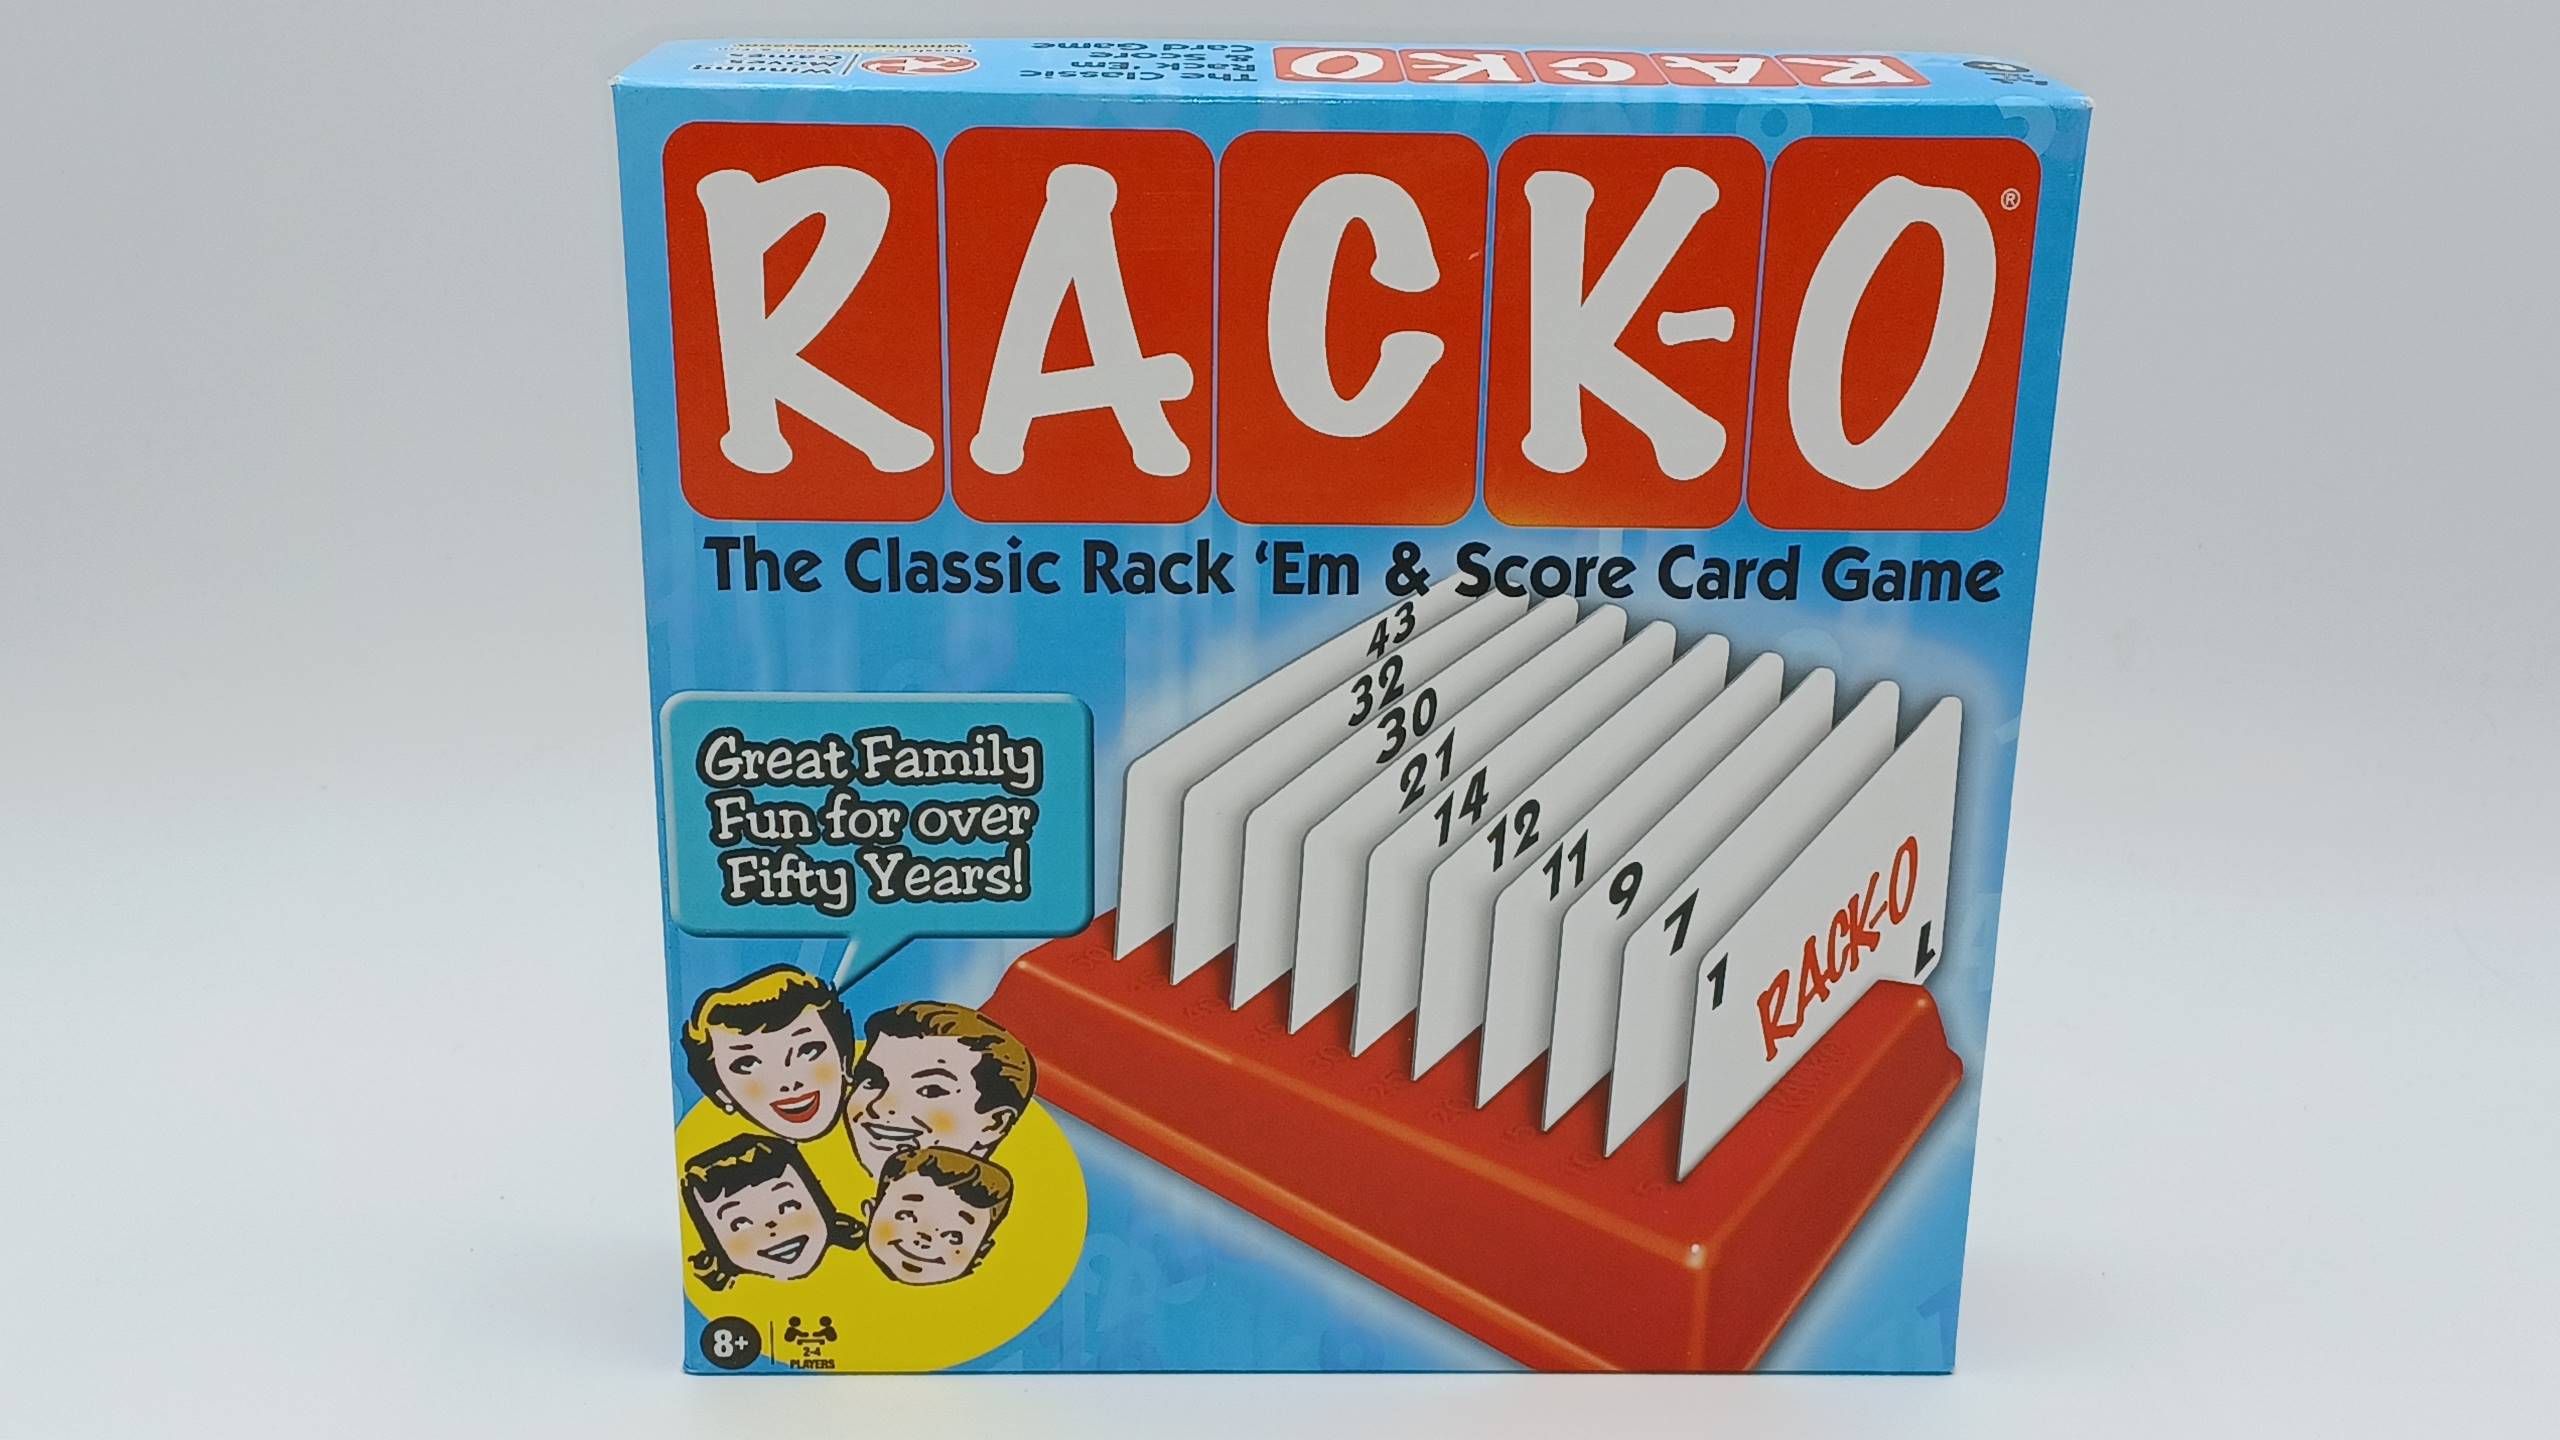 Box for Rack-O